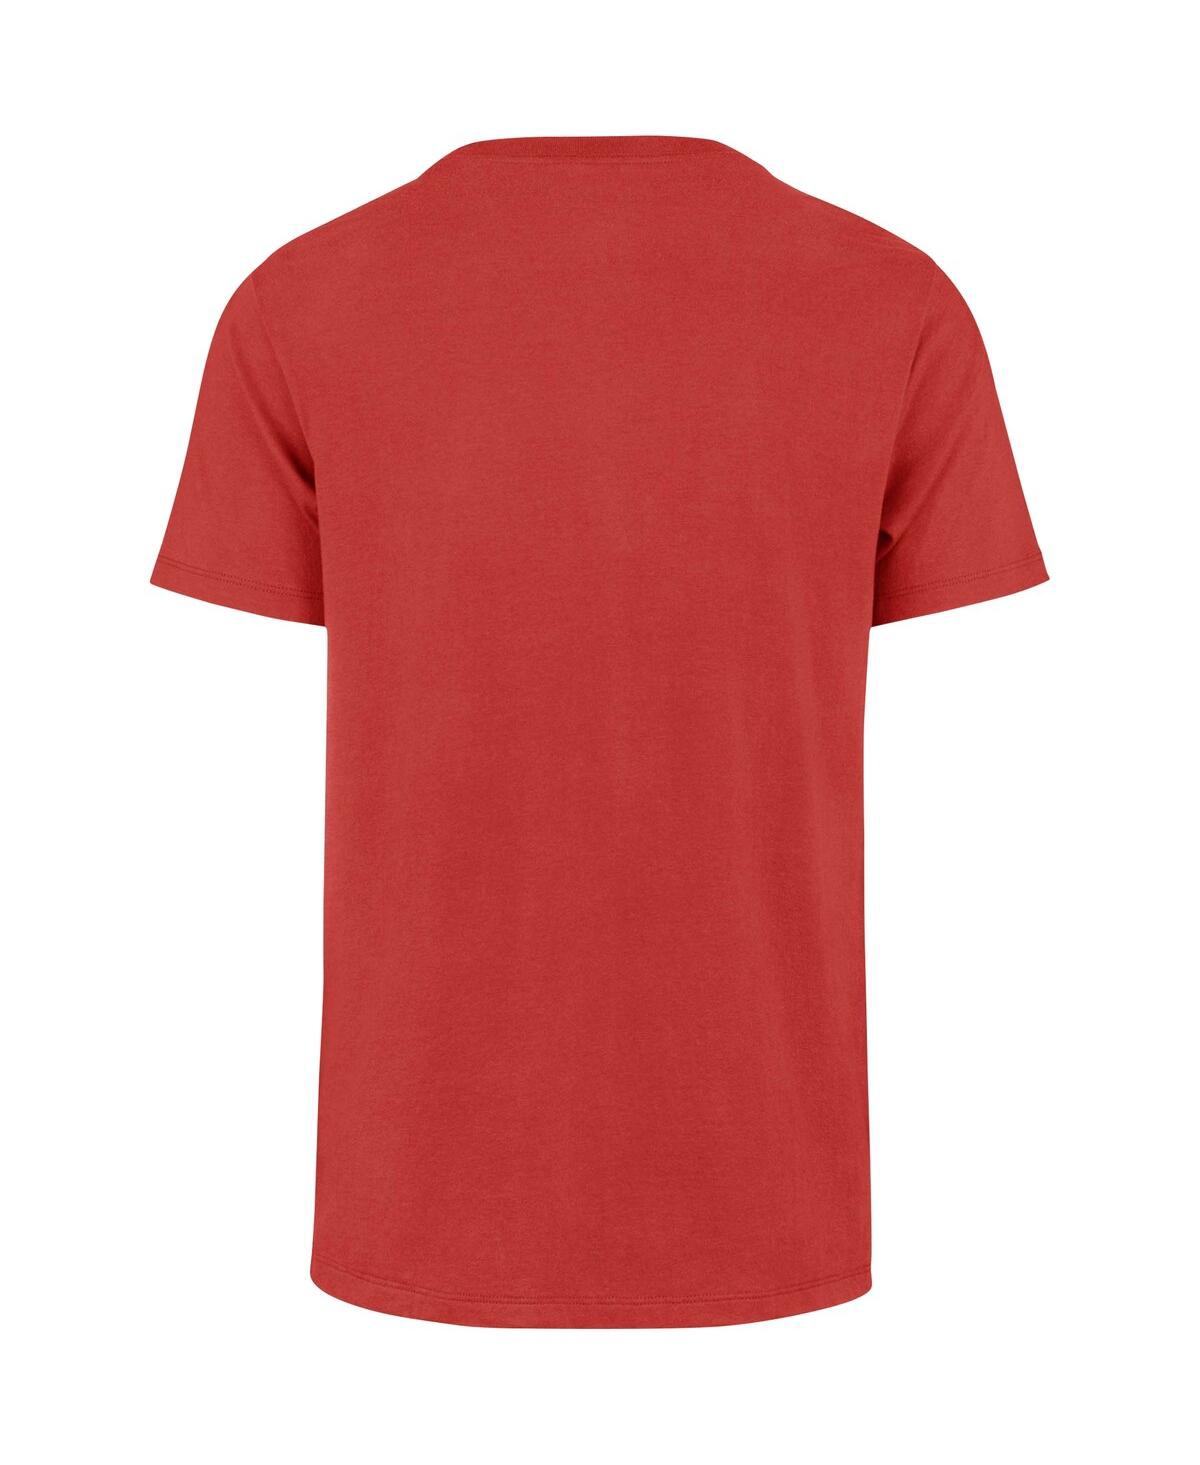 Shop 47 Brand Men's ' Red Distressed Kansas City Chiefs Time Lock Franklin T-shirt